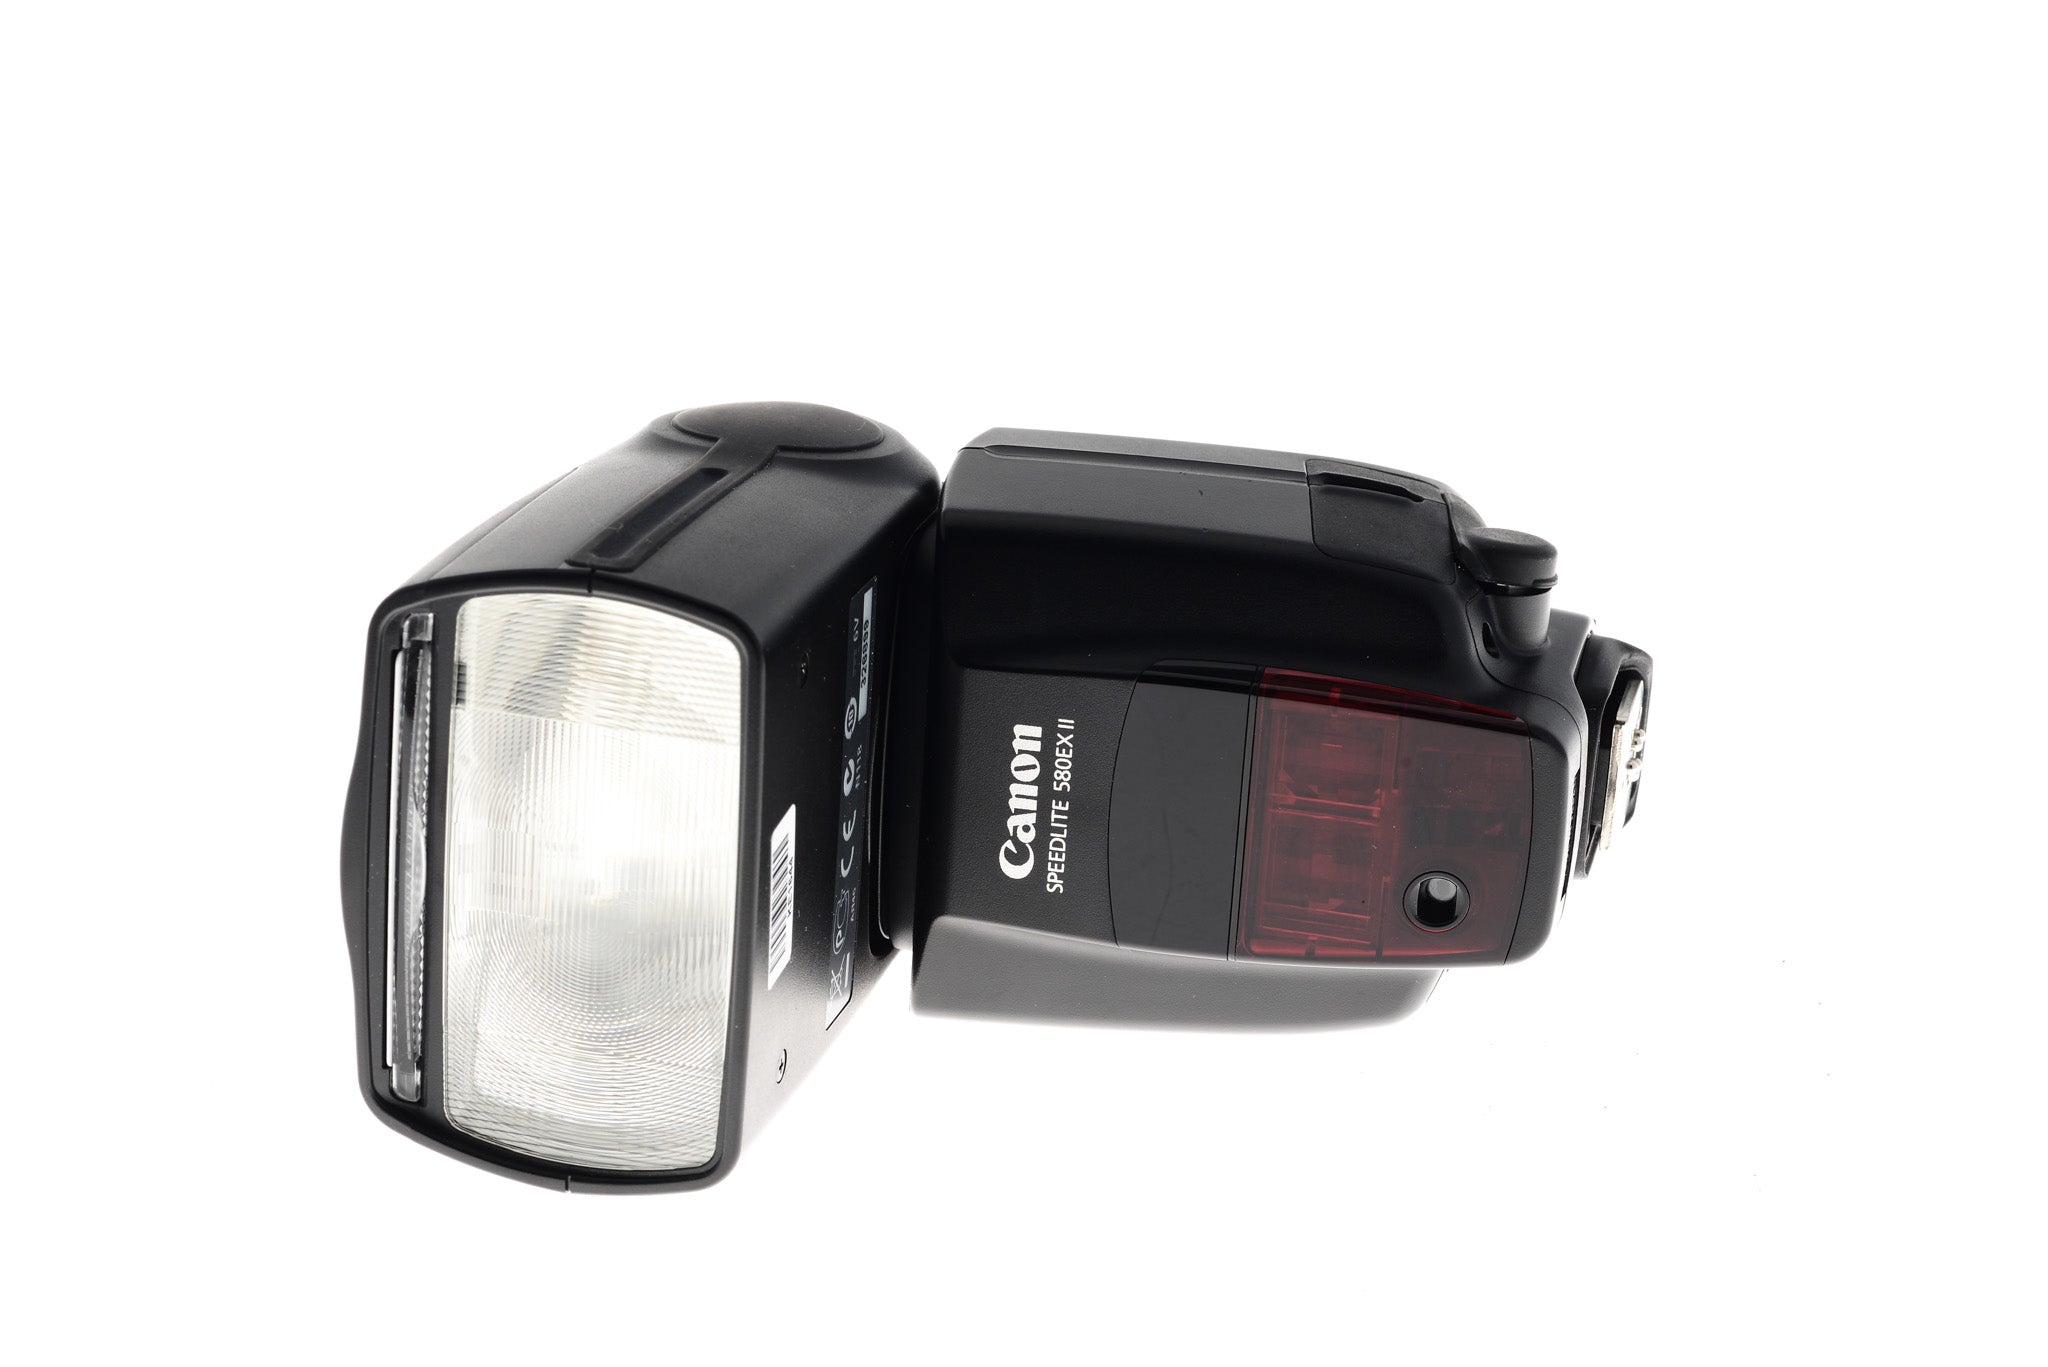 Canon 580EX II Speedlite Flash - Brisbane Camera Hire